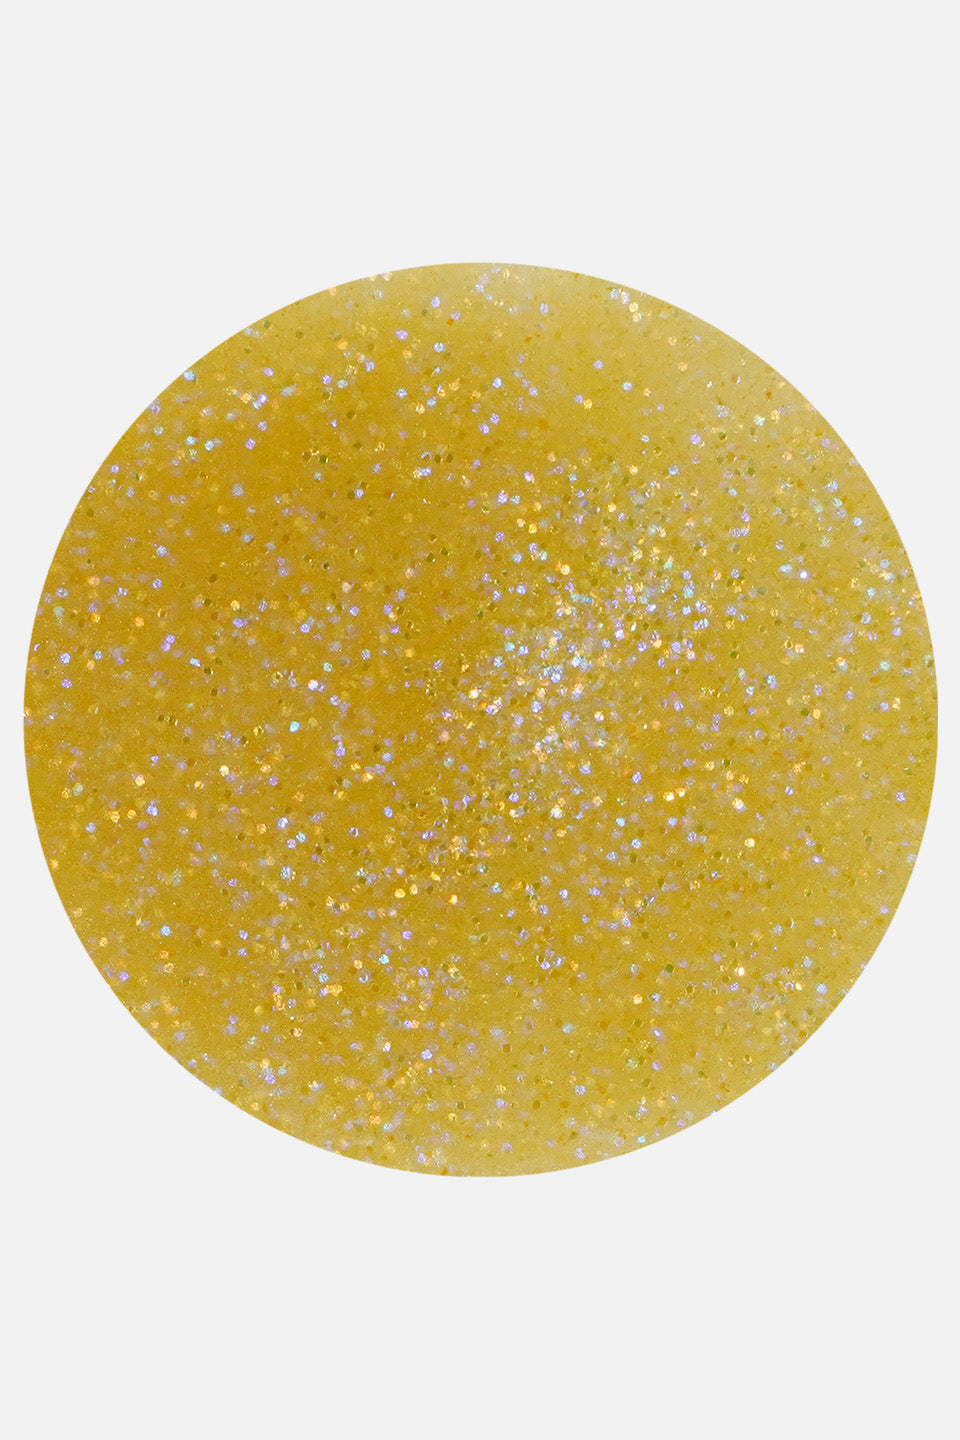 Polvere acrilica verde giallo glitter 5 g